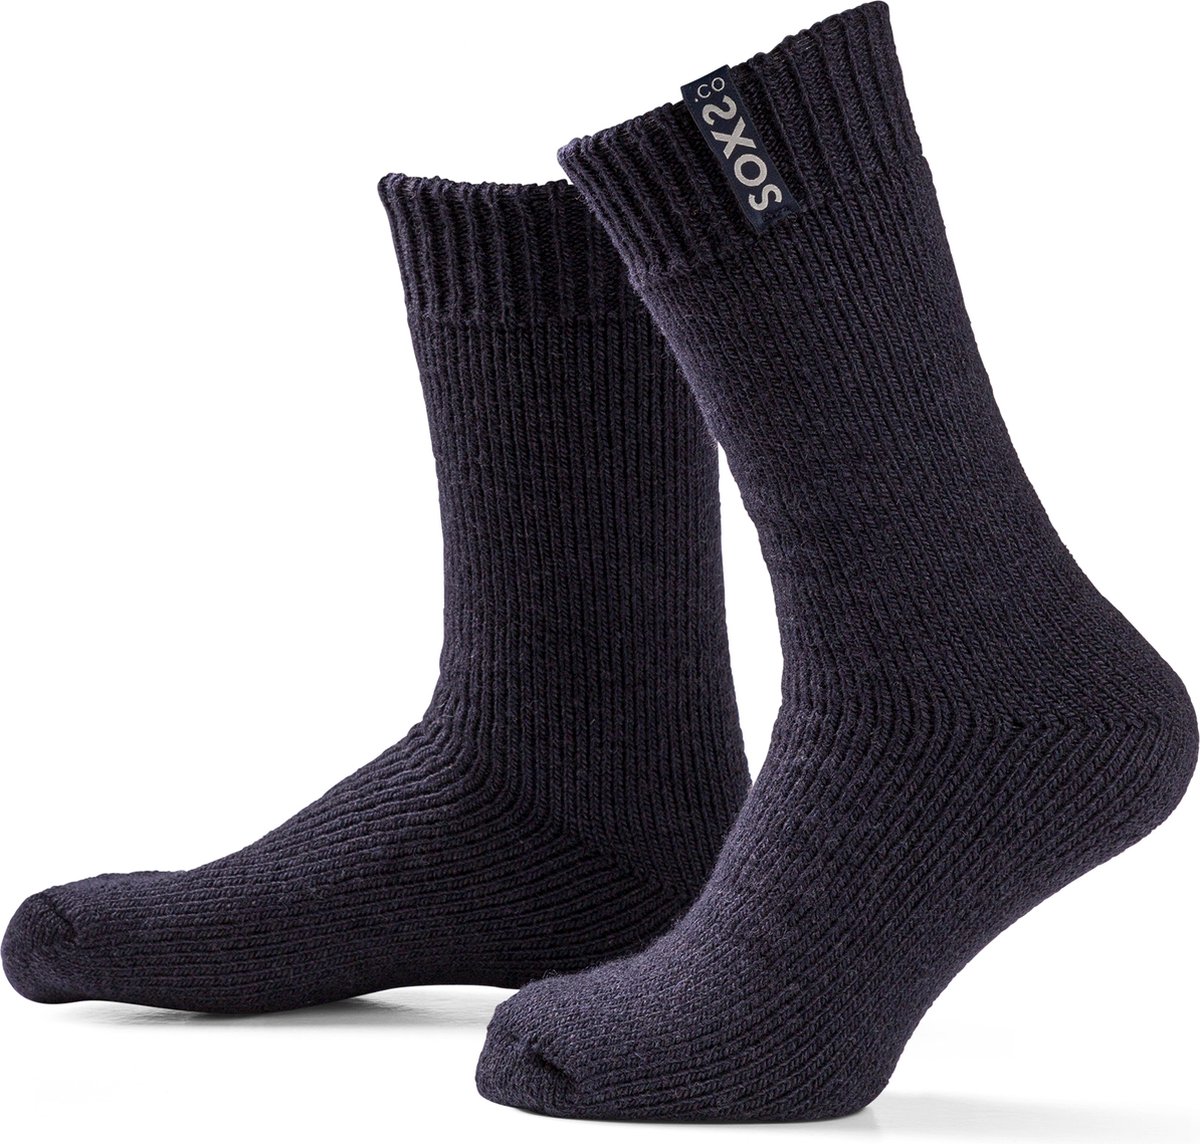 SOXS® Wollen sokken | SOX3541 | Donkerblauw | Kuithoogte | Maat 42-46 | Twilight blue label